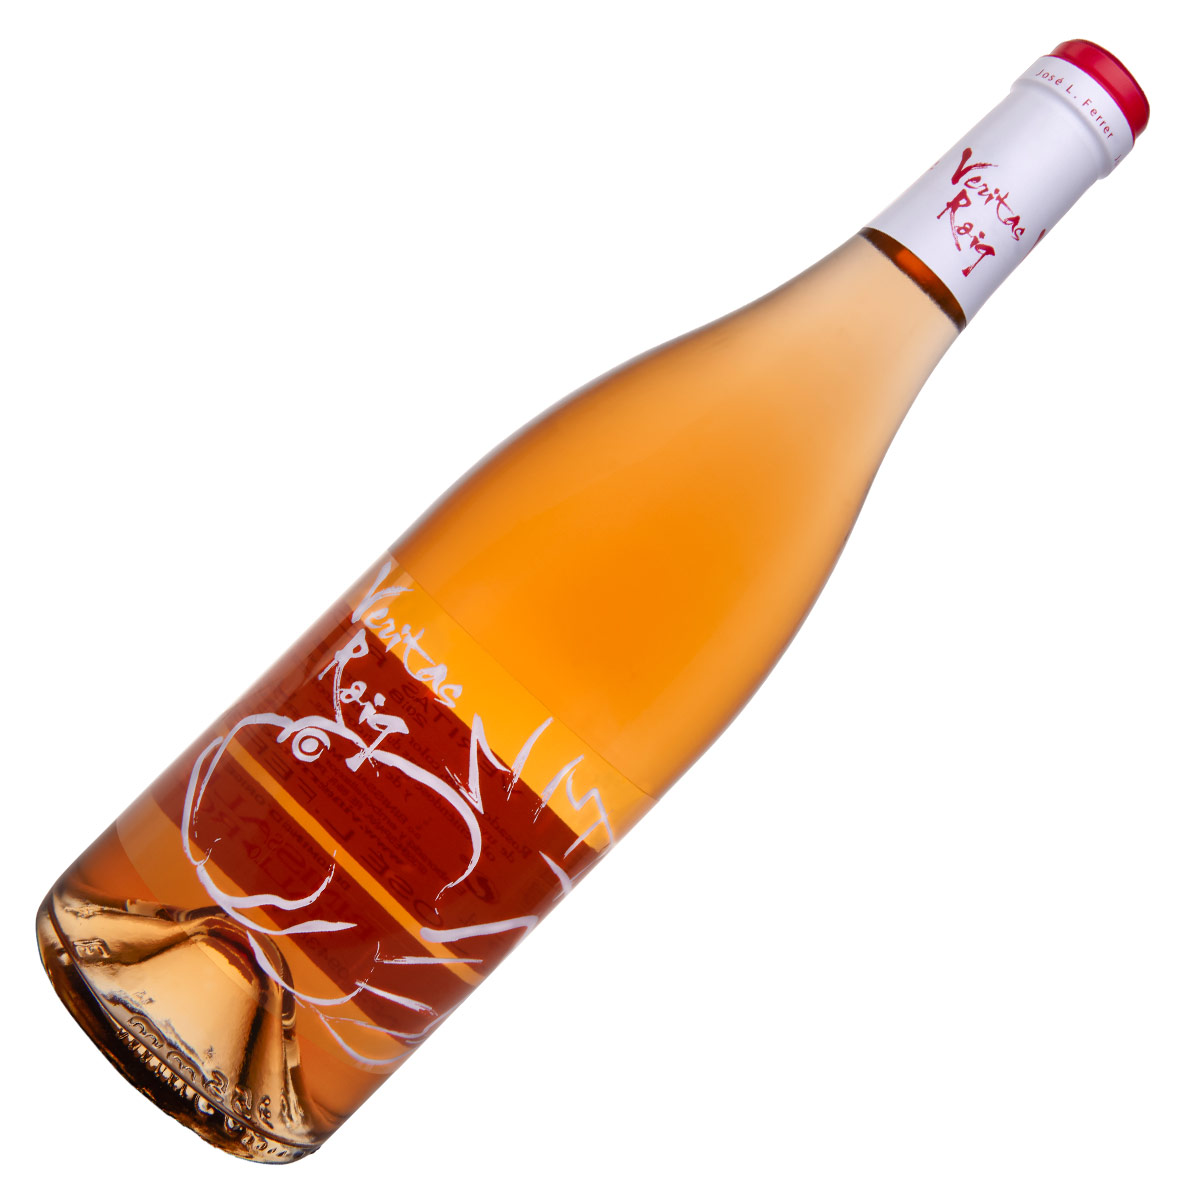 Ferrer Veritas Roig vin rosé D.O. Binissalem